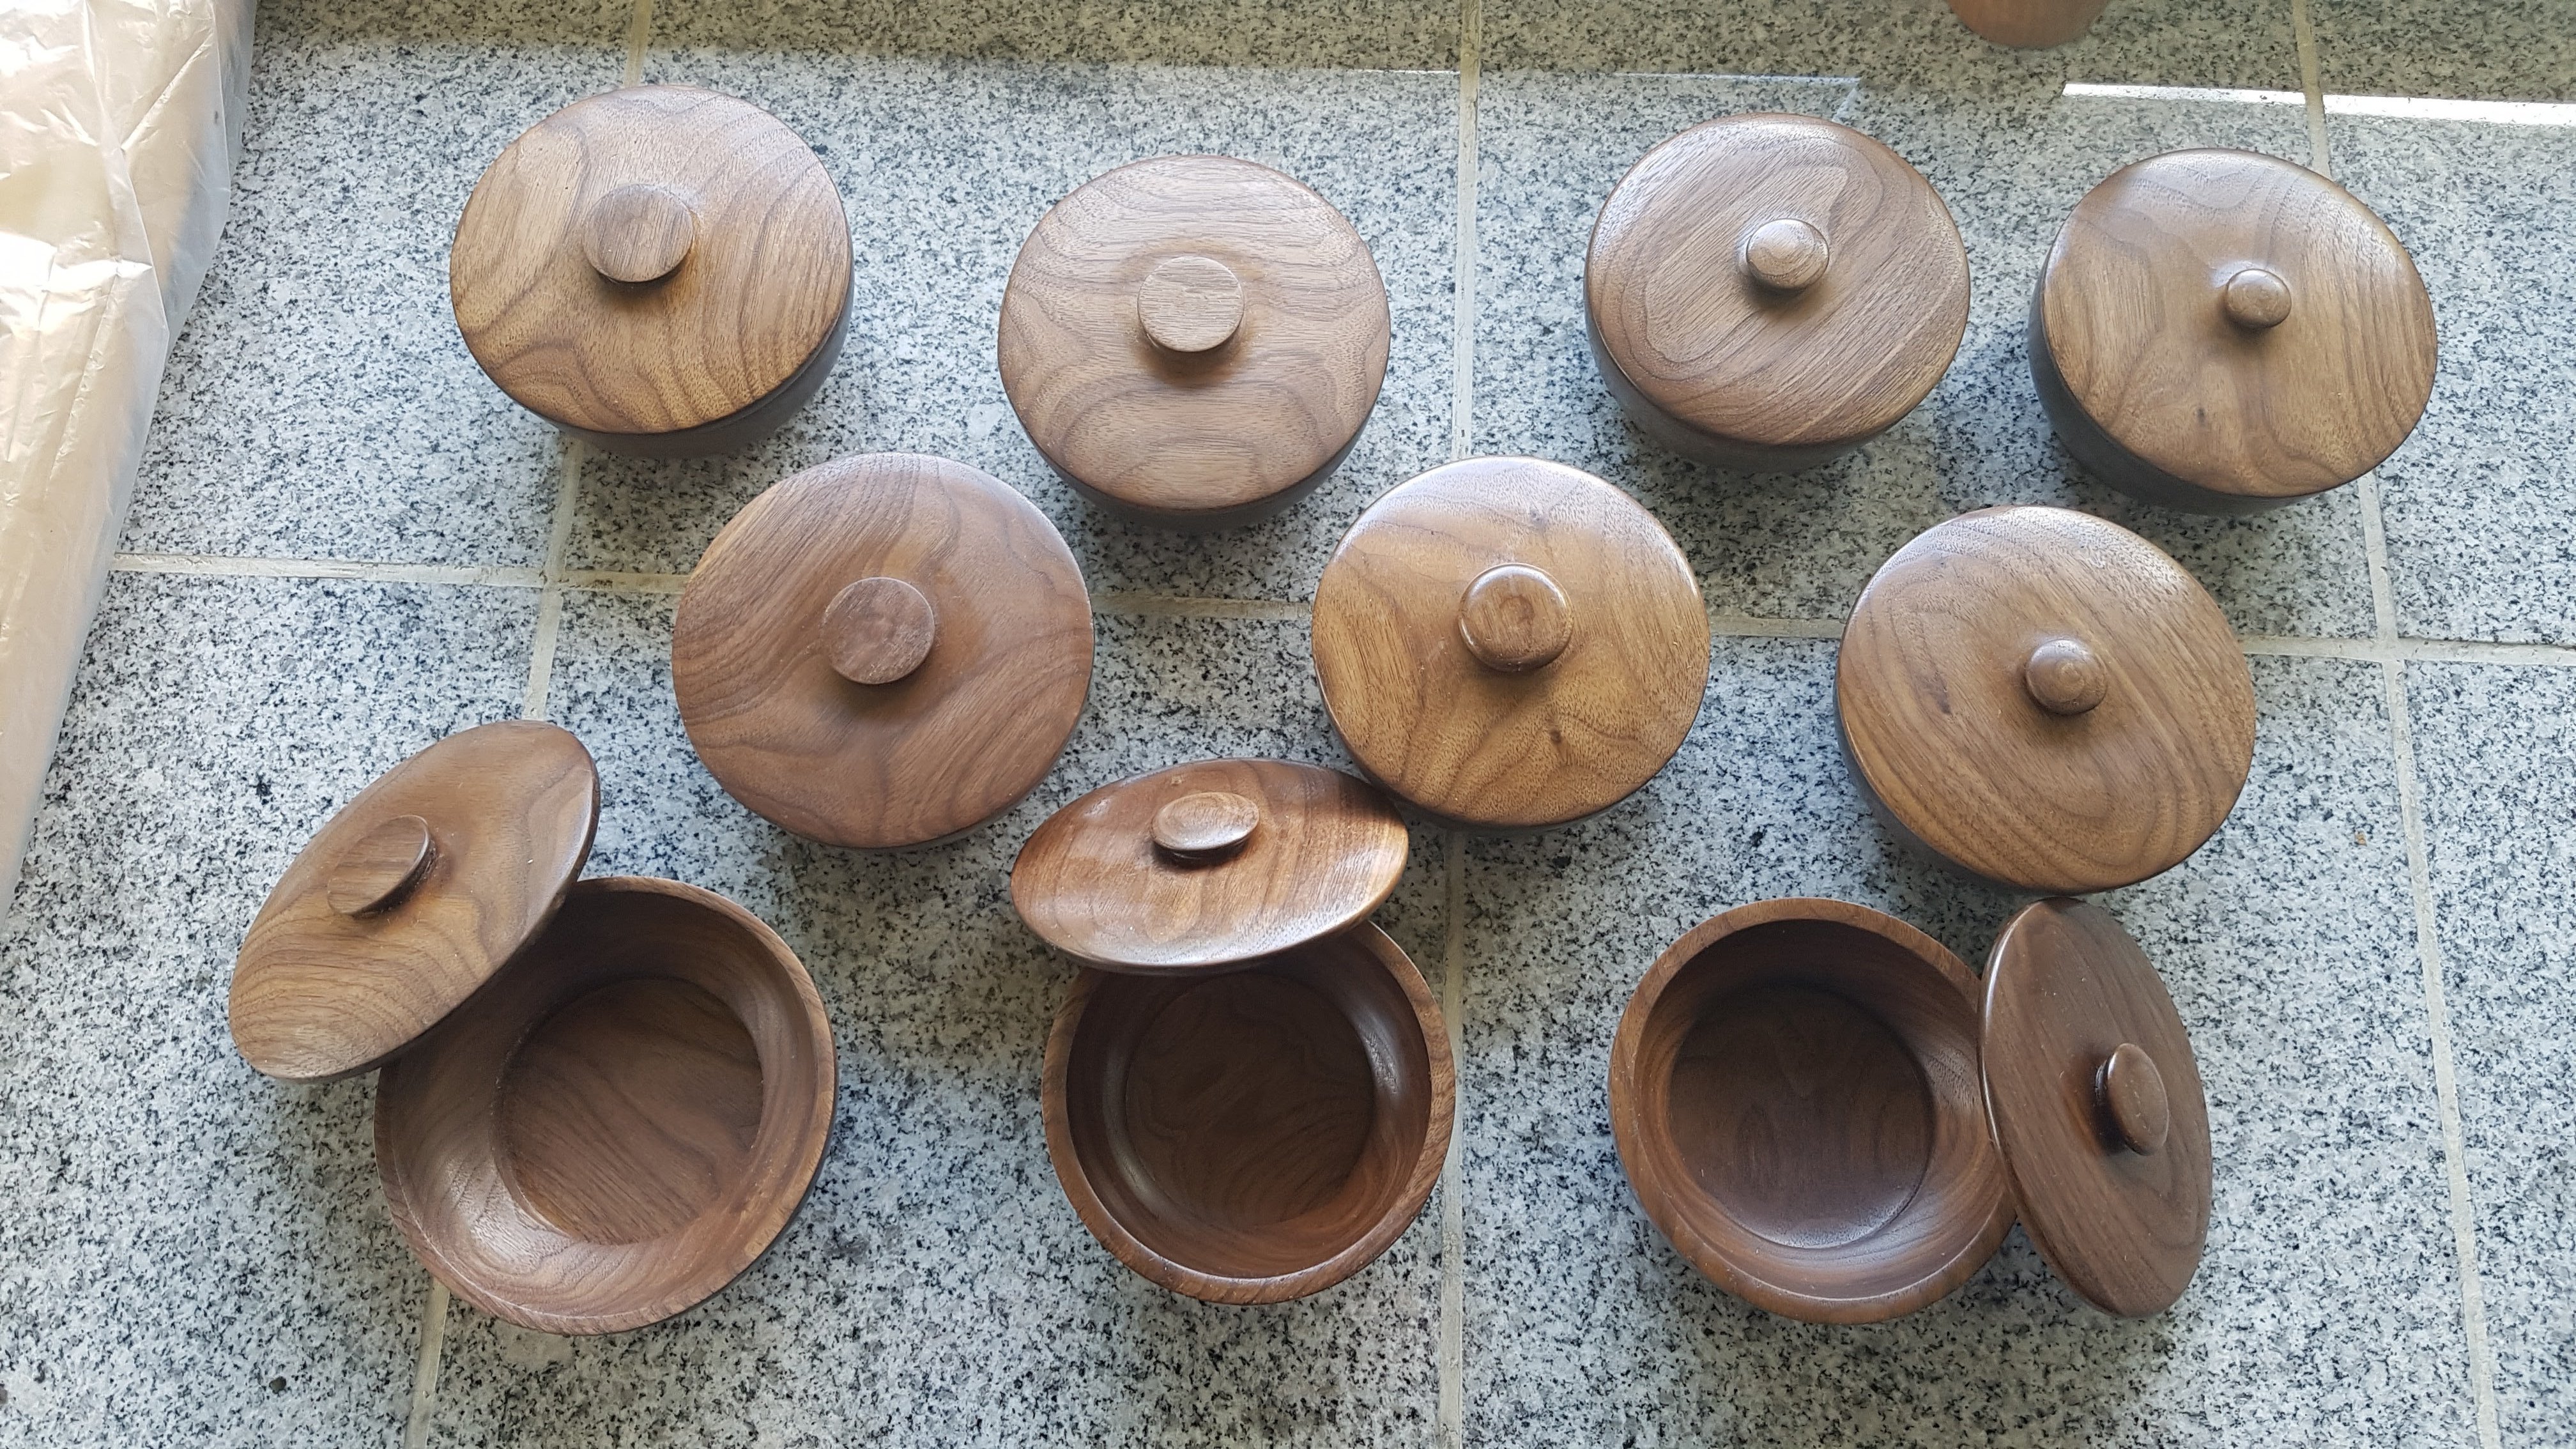 Test run of Walnut wood shaving bowls